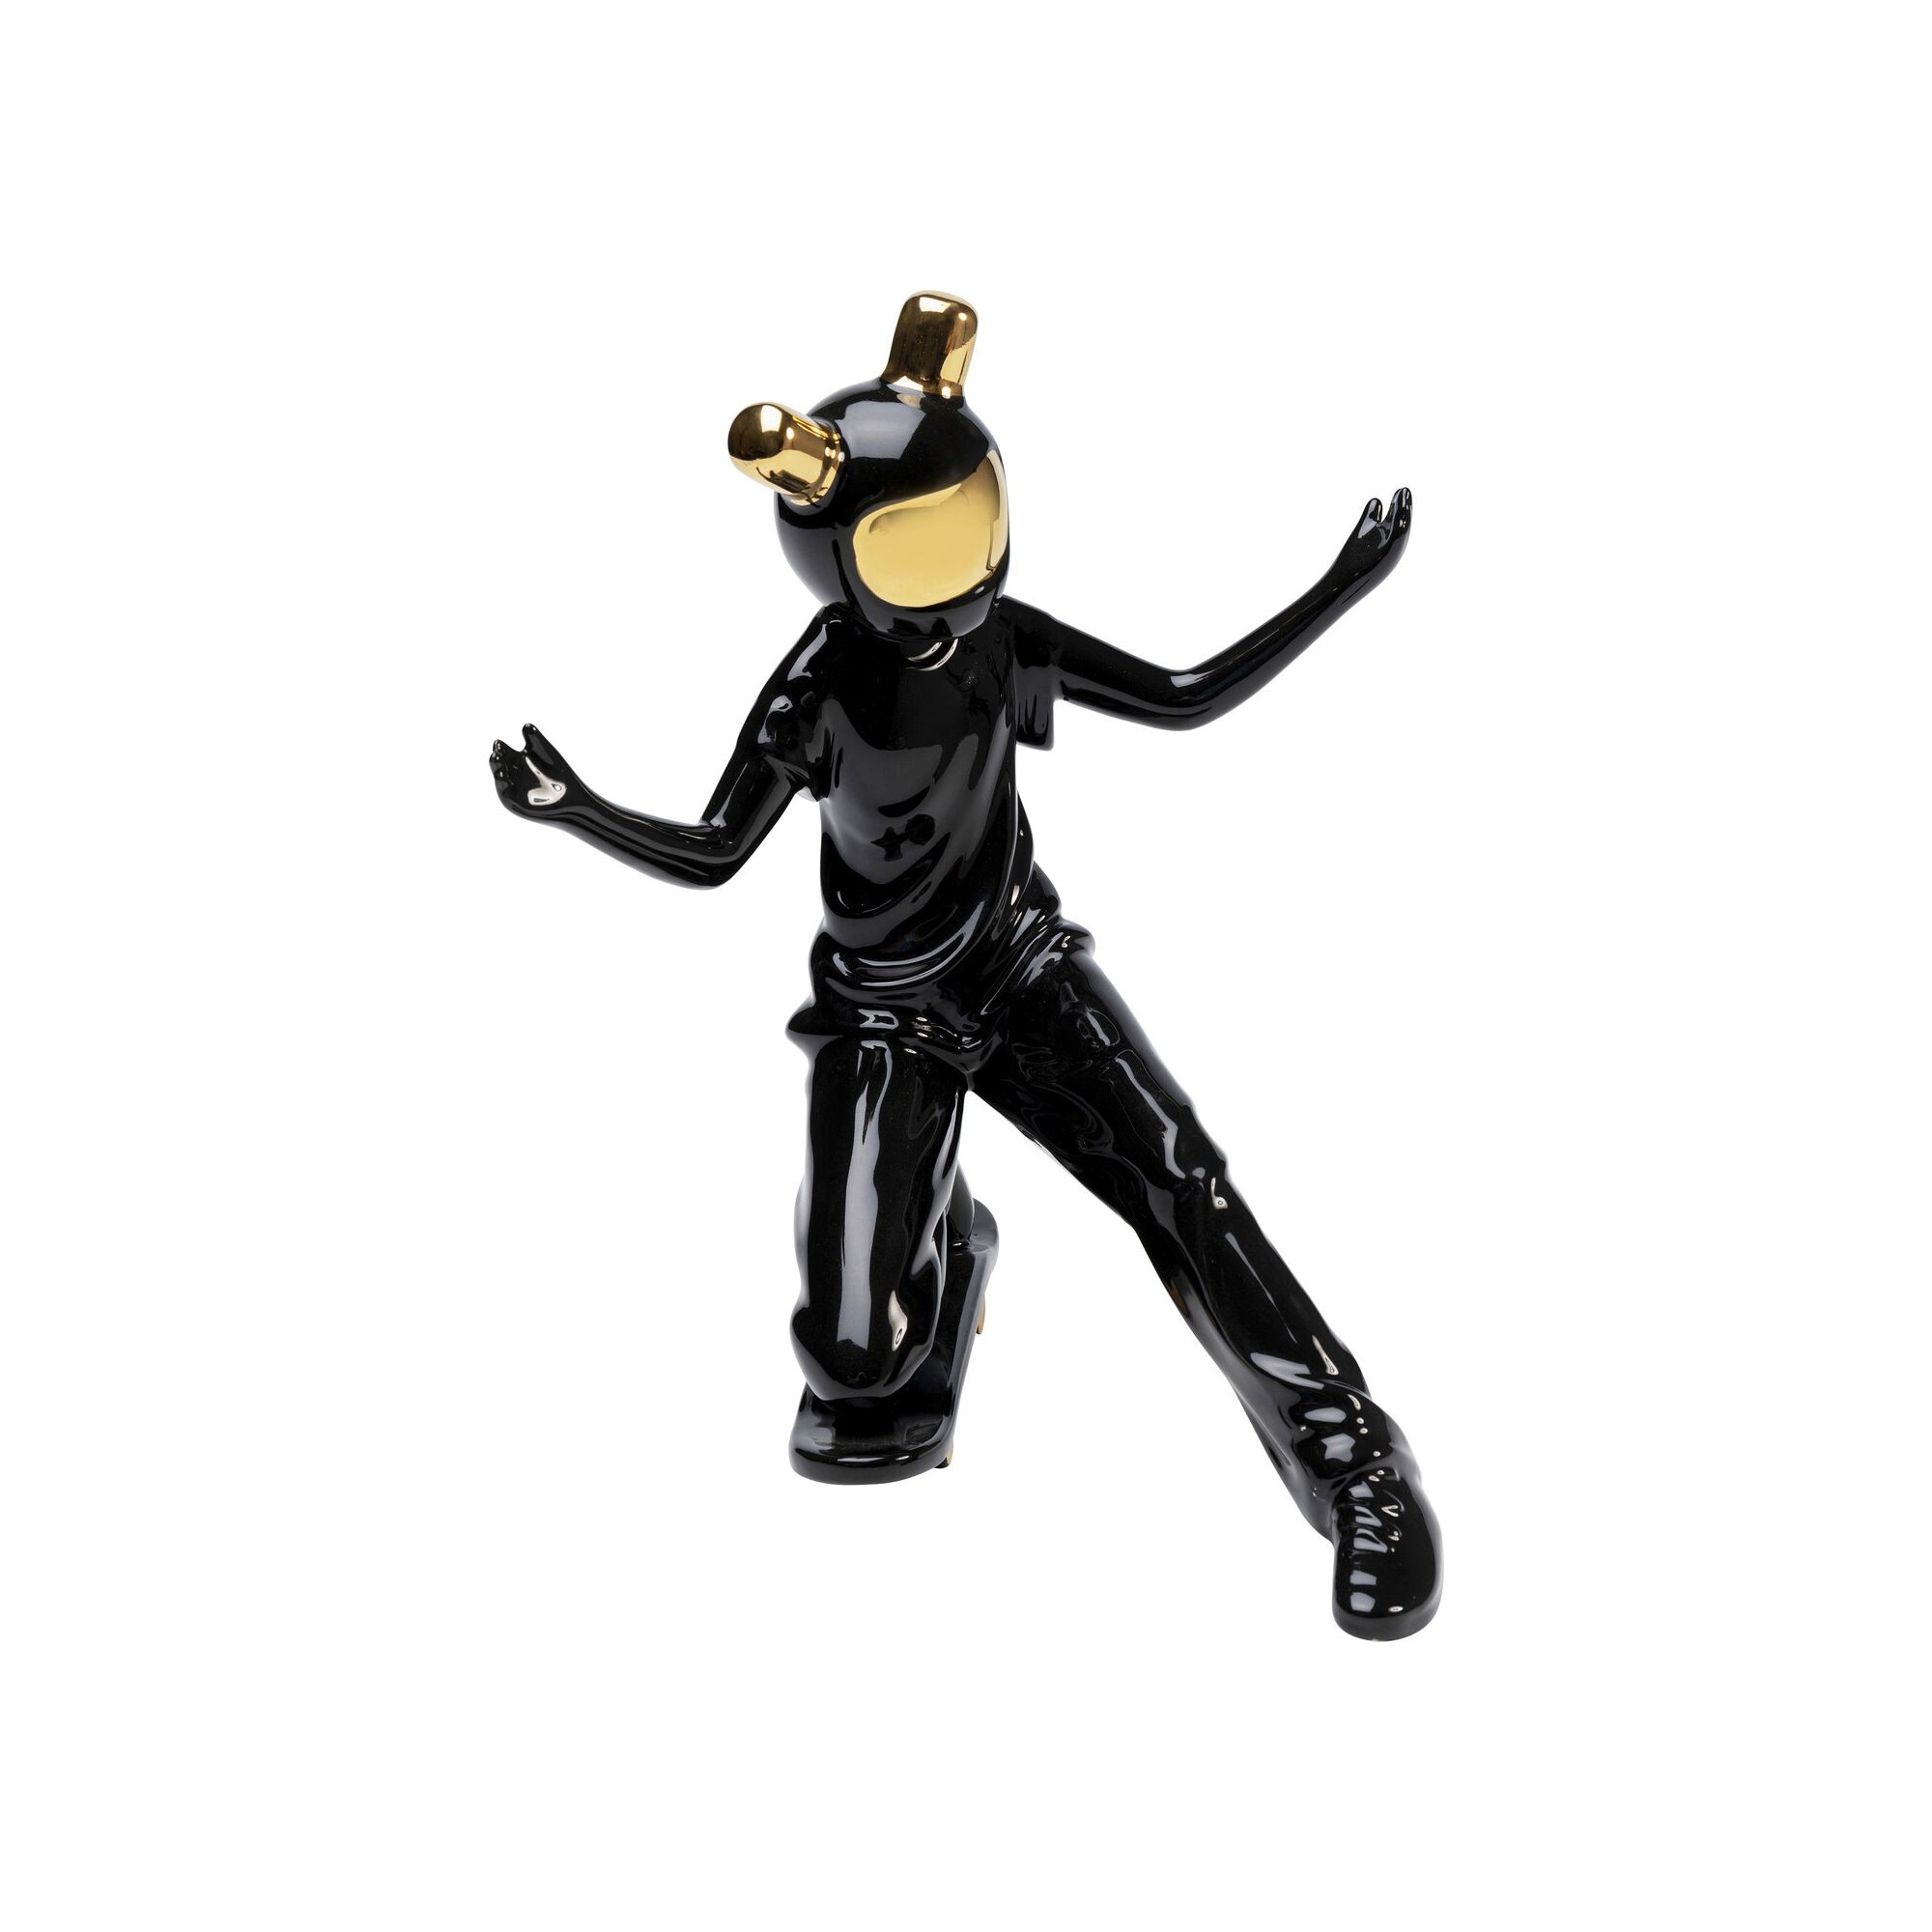 Figurine décorative Skating Astronaut noir